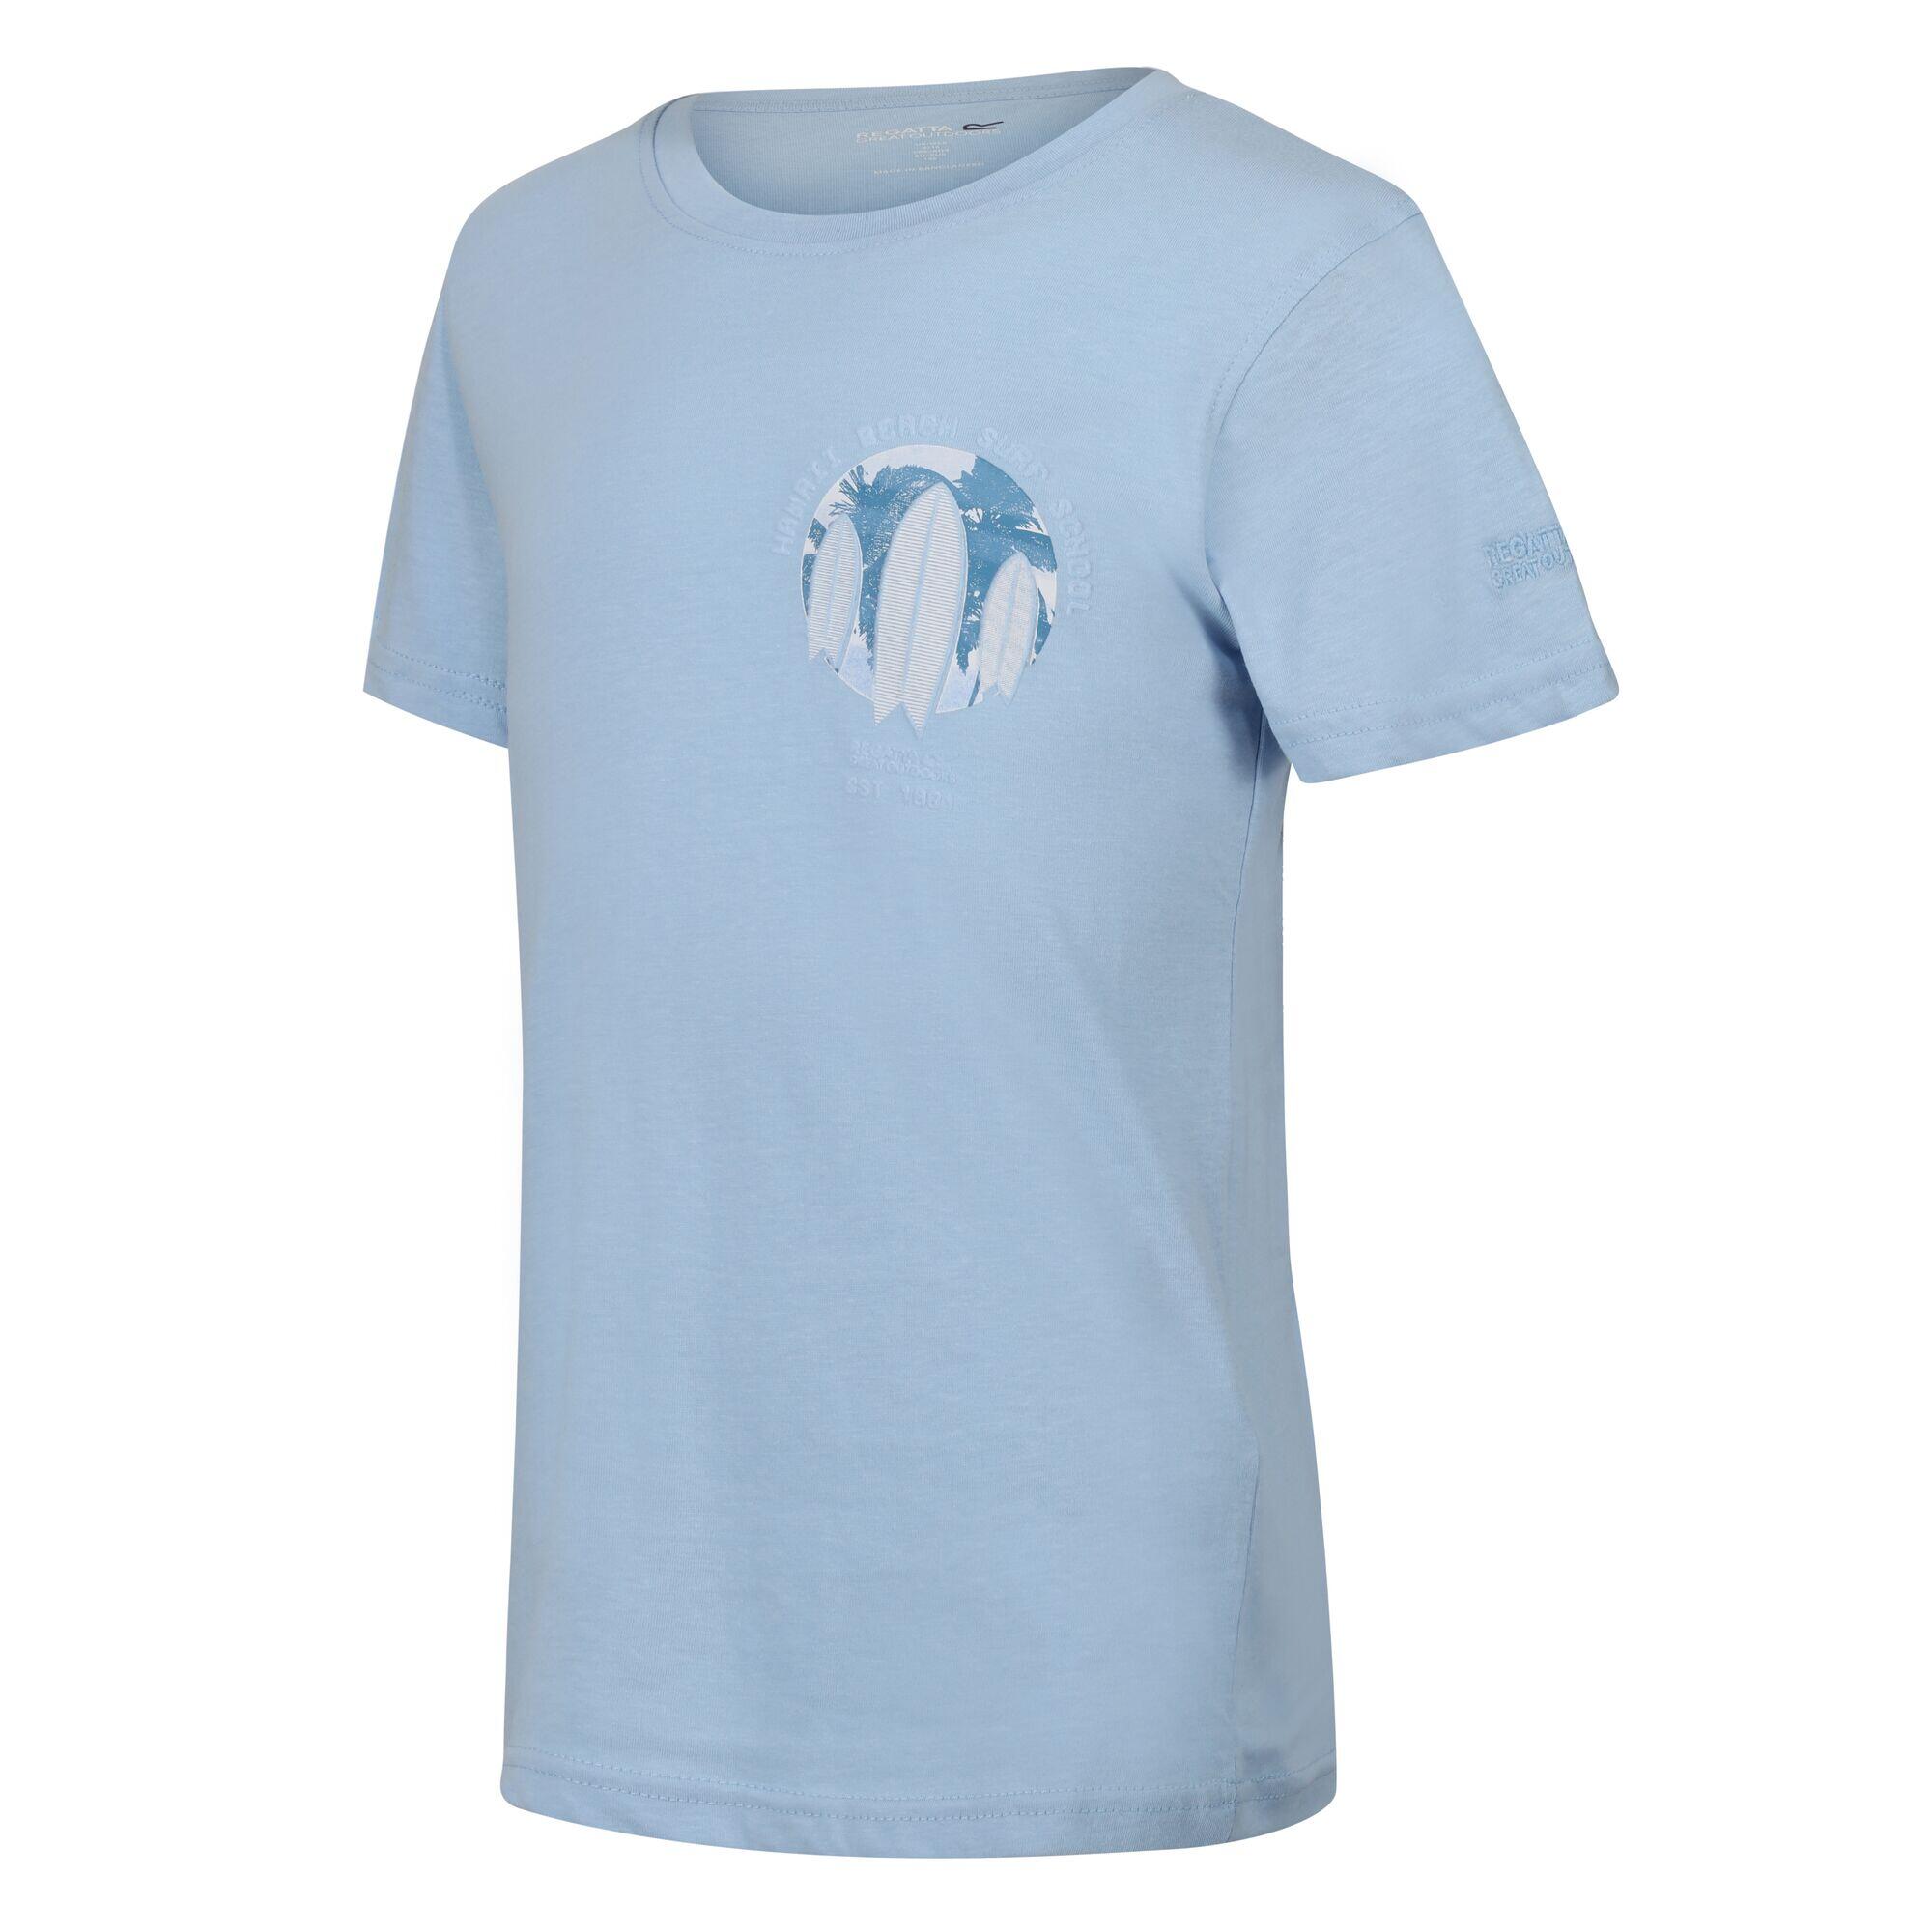 Bosley V Kids Walking Short Sleeve T-Shirt - Powder Blue 4/5